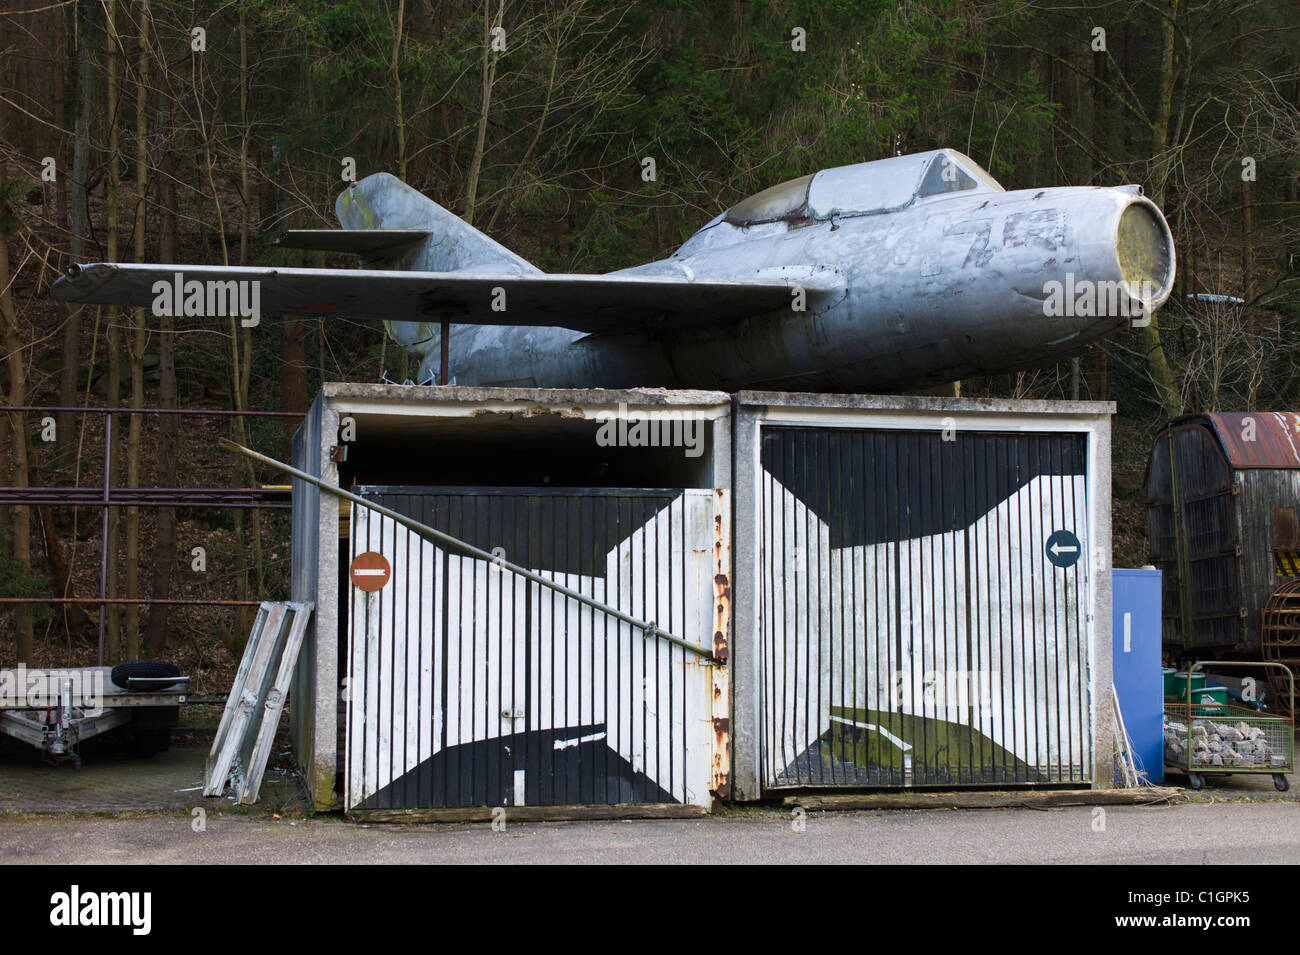 https://c8.alamy.com/comp/C1GPK5/russion-mig-fighter-jet-fahrzeug-museum-marxzell-near-karlsruhe-germany-C1GPK5.jpg